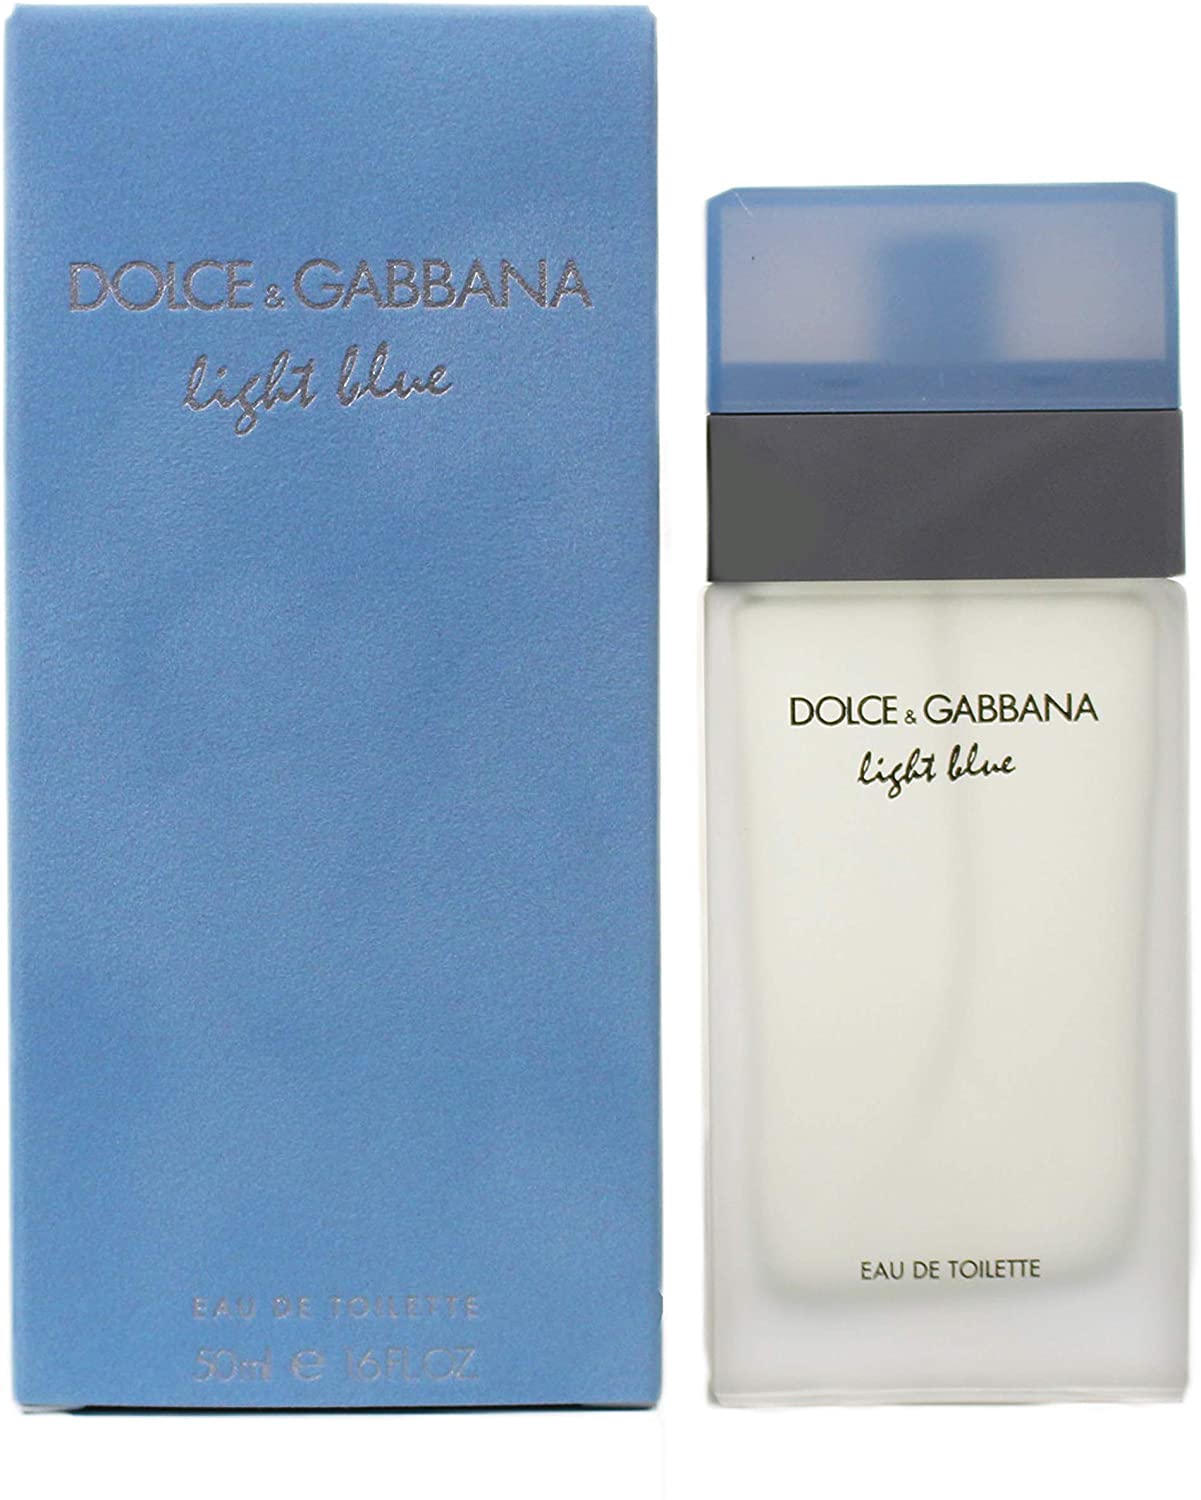 dolce & gabbana light blue 50ml